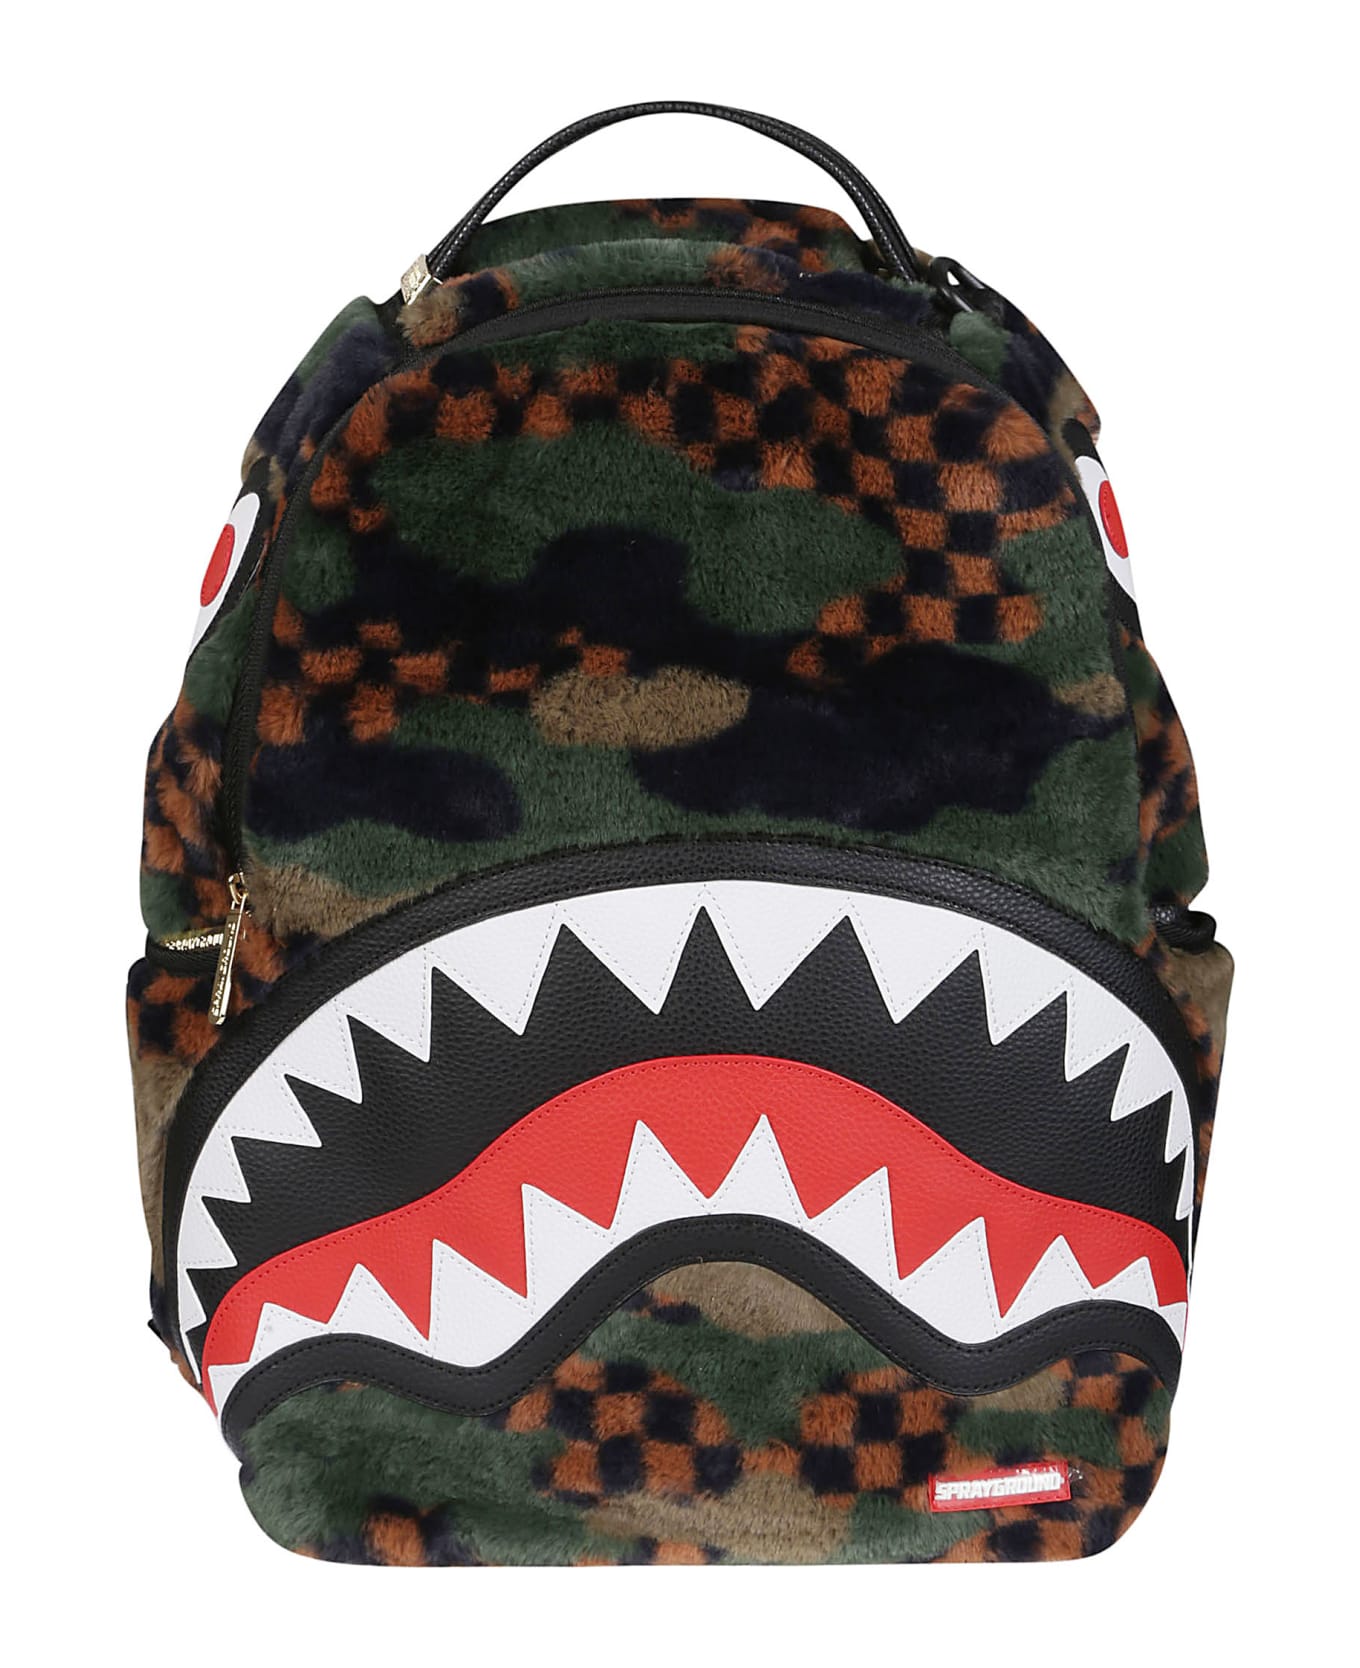 Sprayground Backpack - Camouflage